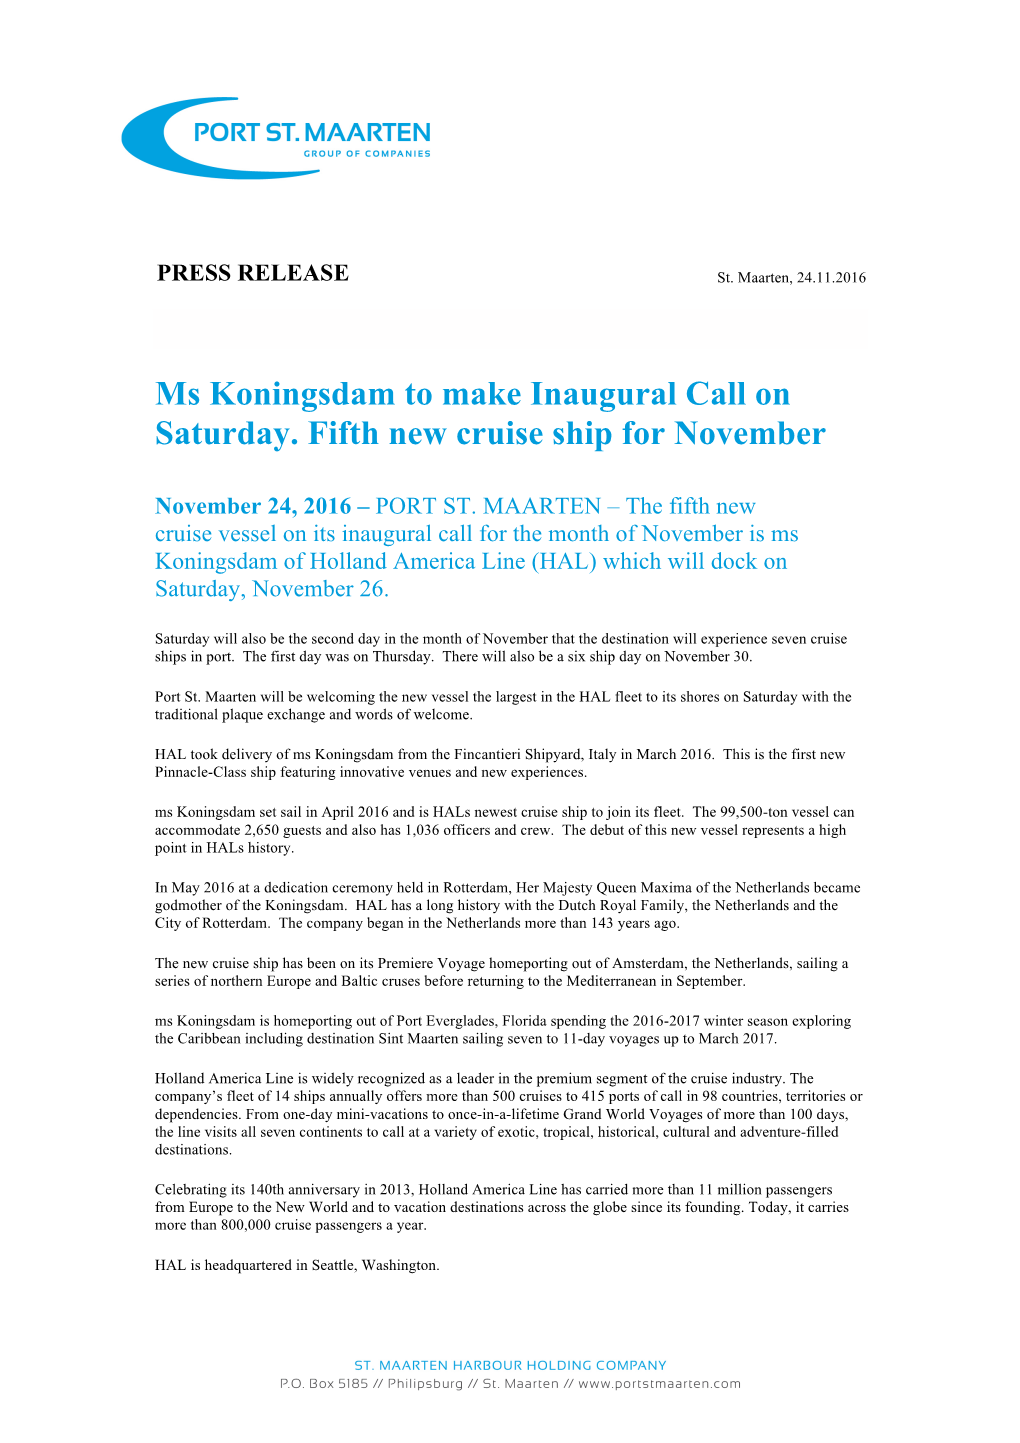 Ms Koningsdam to Make Inaugural Call on Saturday. Fifth New Cruise Ship for November